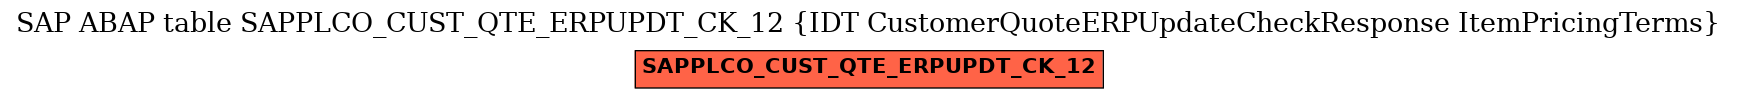 E-R Diagram for table SAPPLCO_CUST_QTE_ERPUPDT_CK_12 (IDT CustomerQuoteERPUpdateCheckResponse ItemPricingTerms)